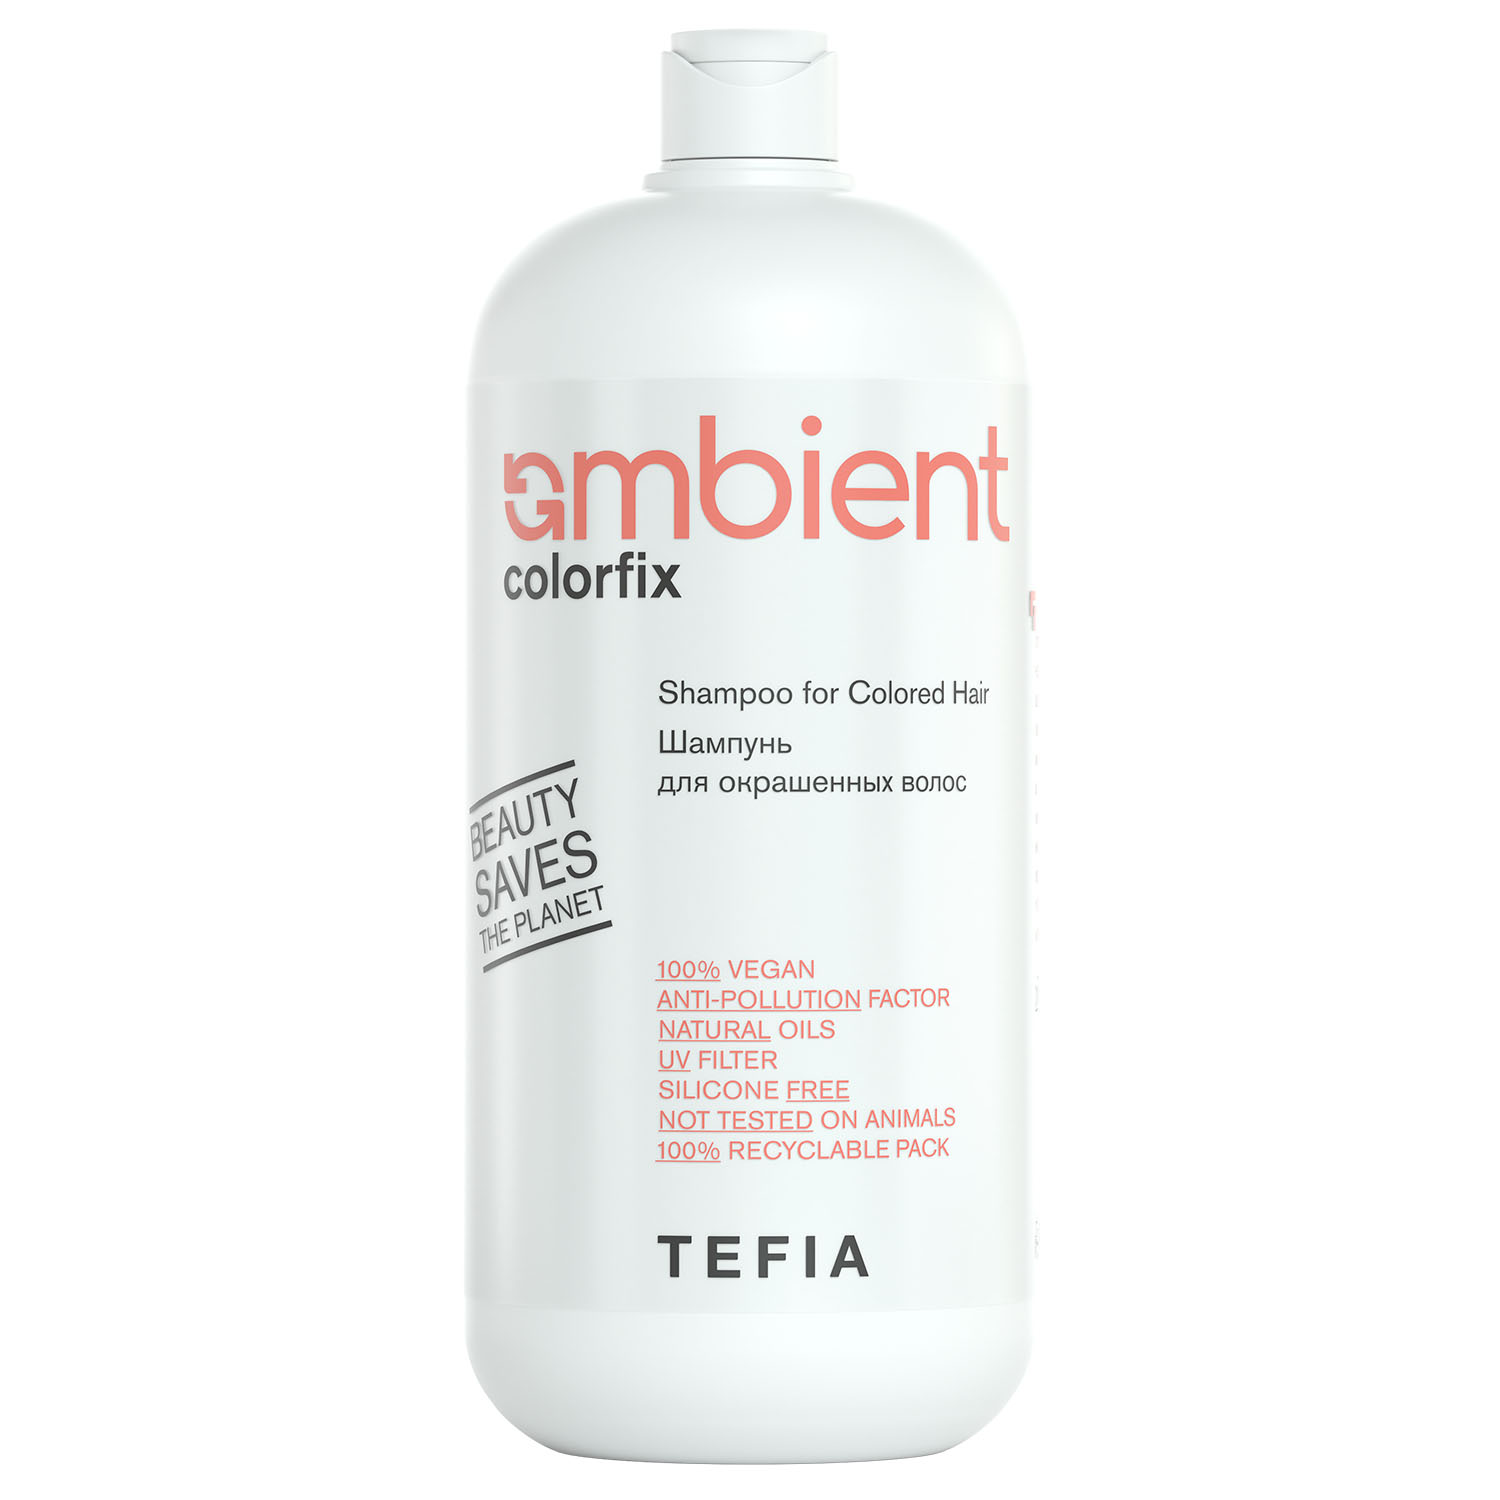 Tefia Шампунь для окрашенных волос Shampoo for Colored Hair, 950 мл (Tefia, Ambient) tefia ambient revival шампунь для поврежденных волос 950 мл